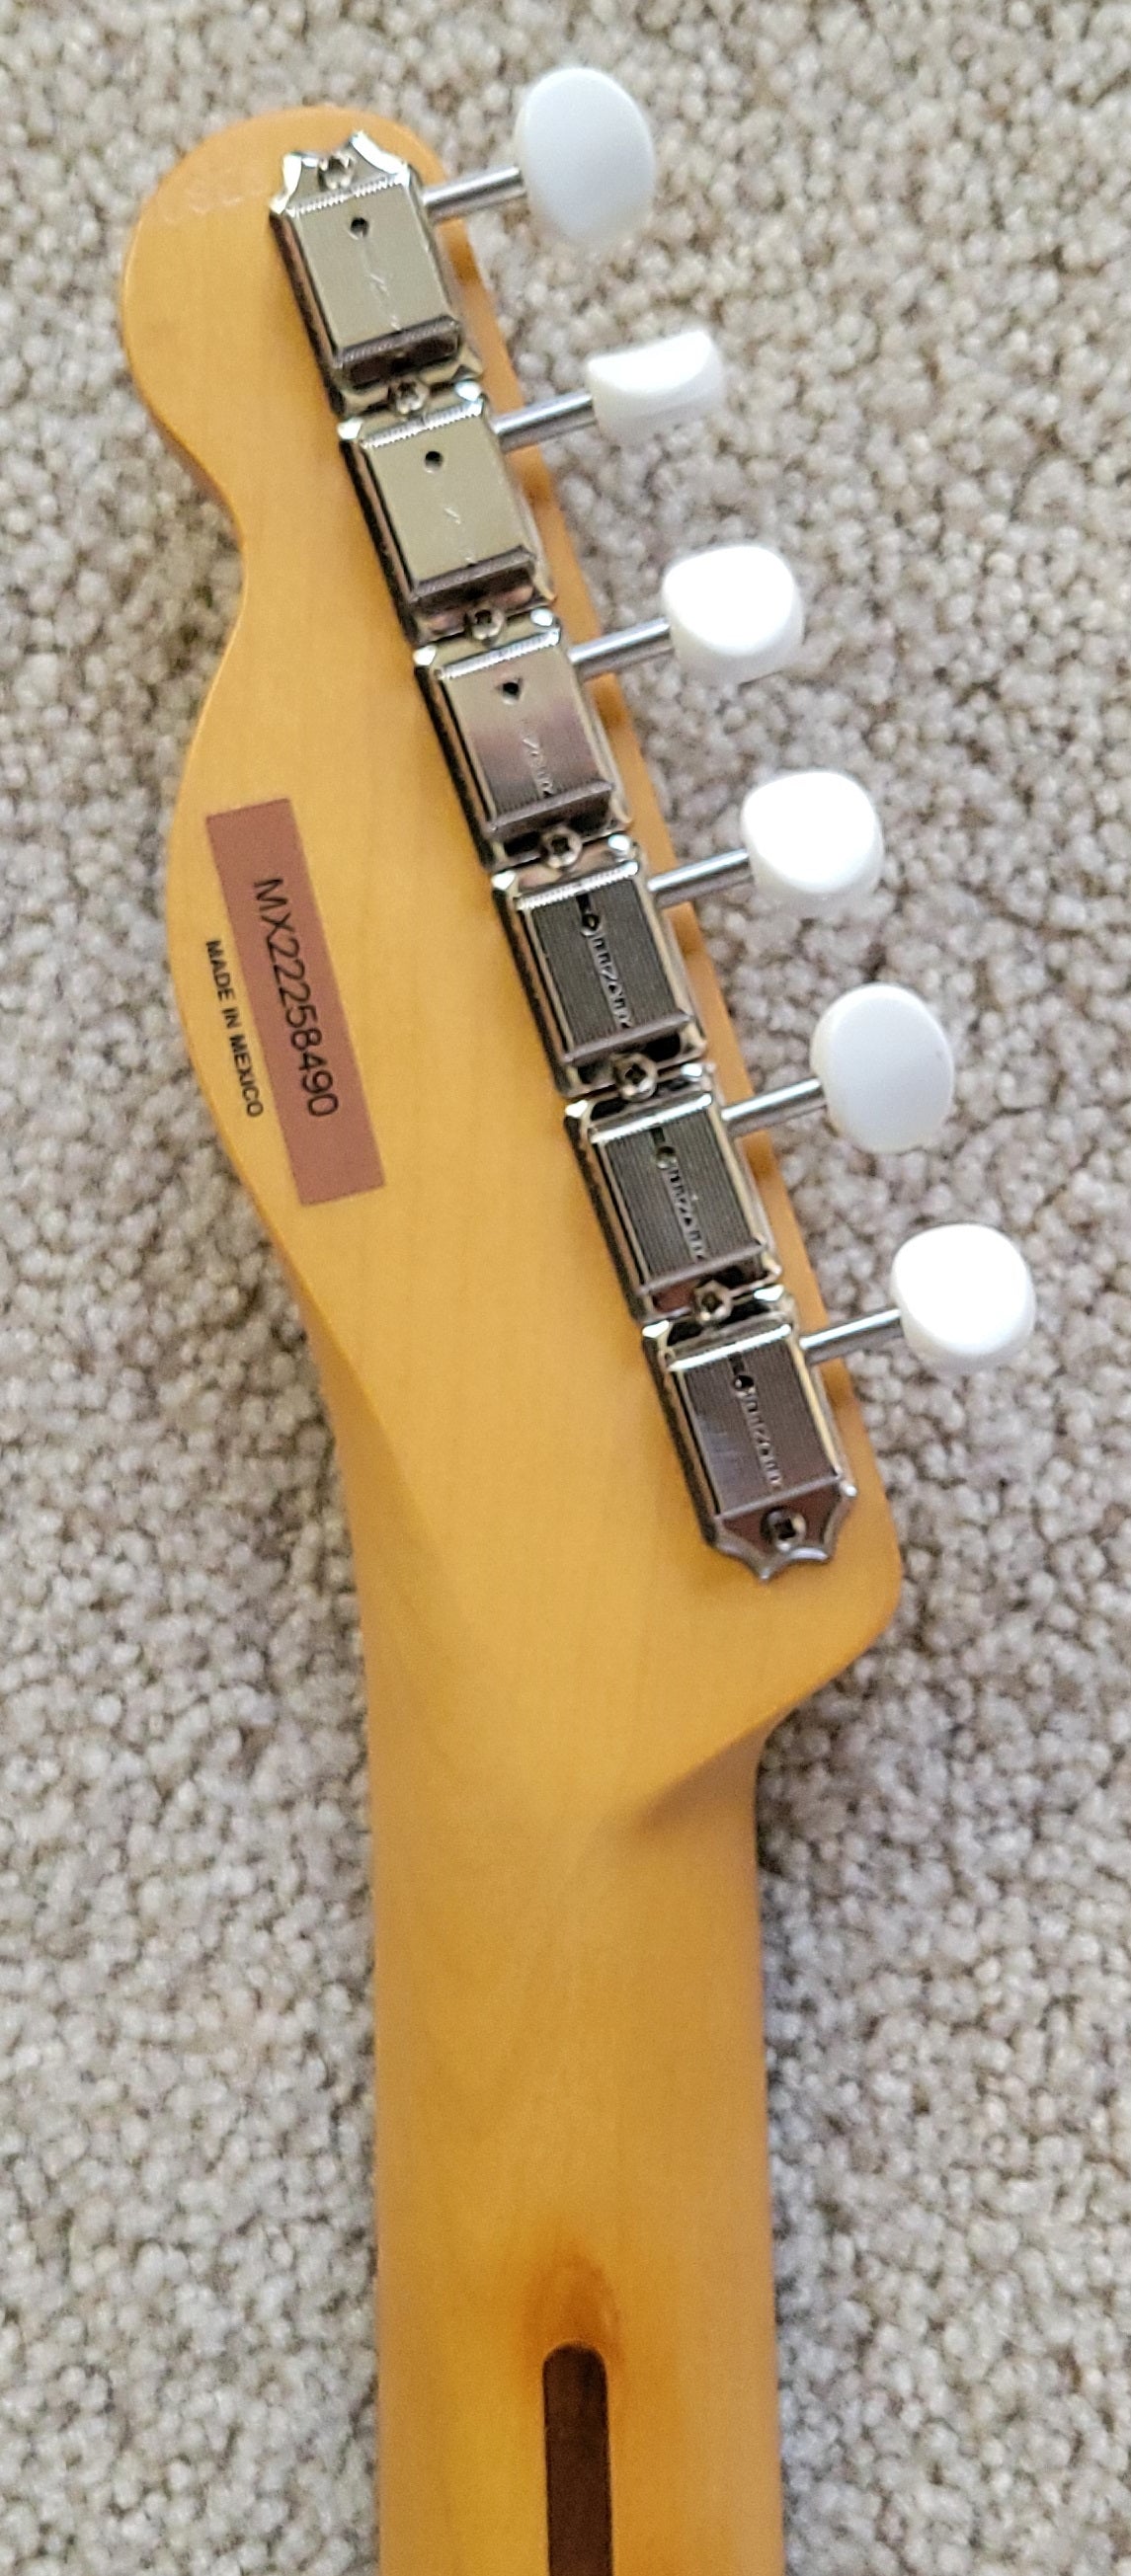 Fender Gold Foil Telecaster Electric Guitar, White Blonde Finish, New Gig Bag